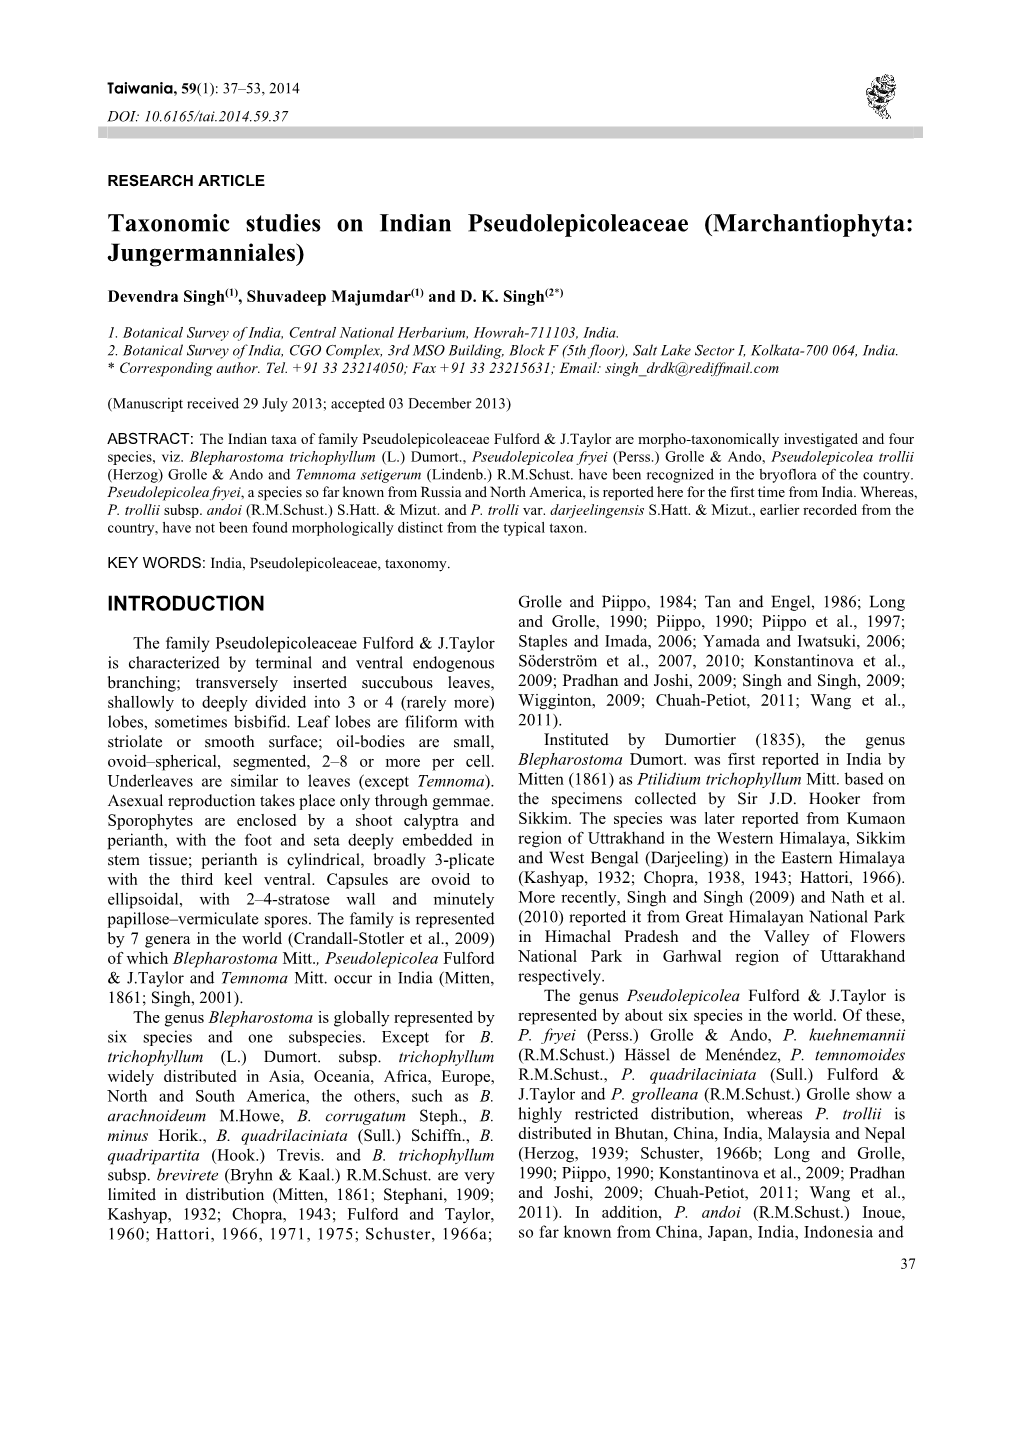 Taxonomic Studies on Indian Pseudolepicoleaceae (Marchantiophyta: Jungermanniales)